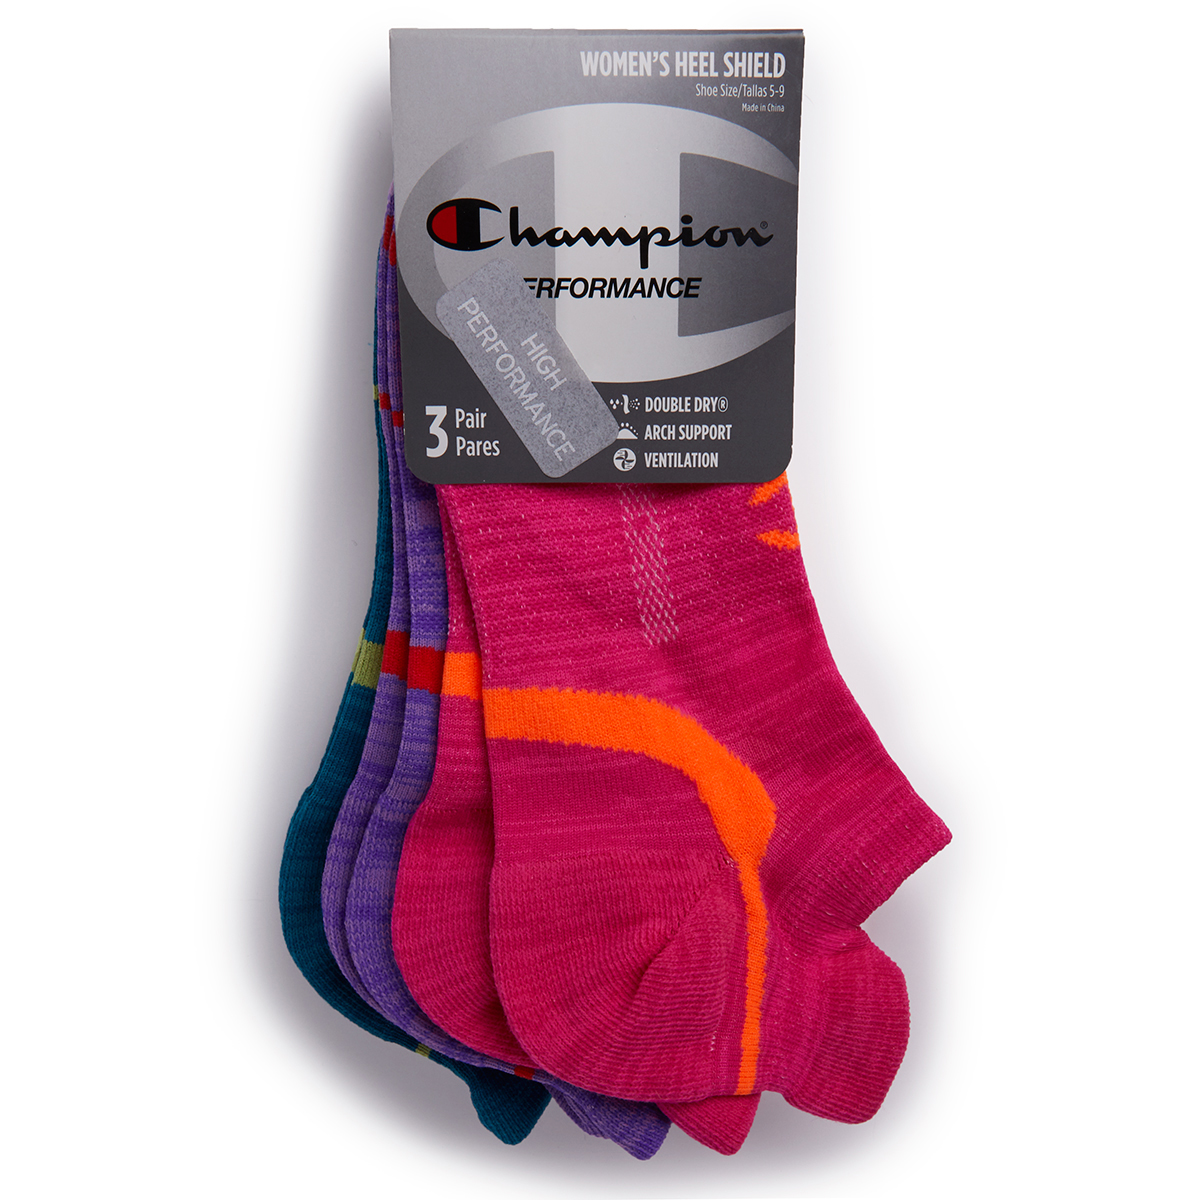 Champion Women's Space Dye Heel Shield Socks, 3 Pack - Various Patterns, L